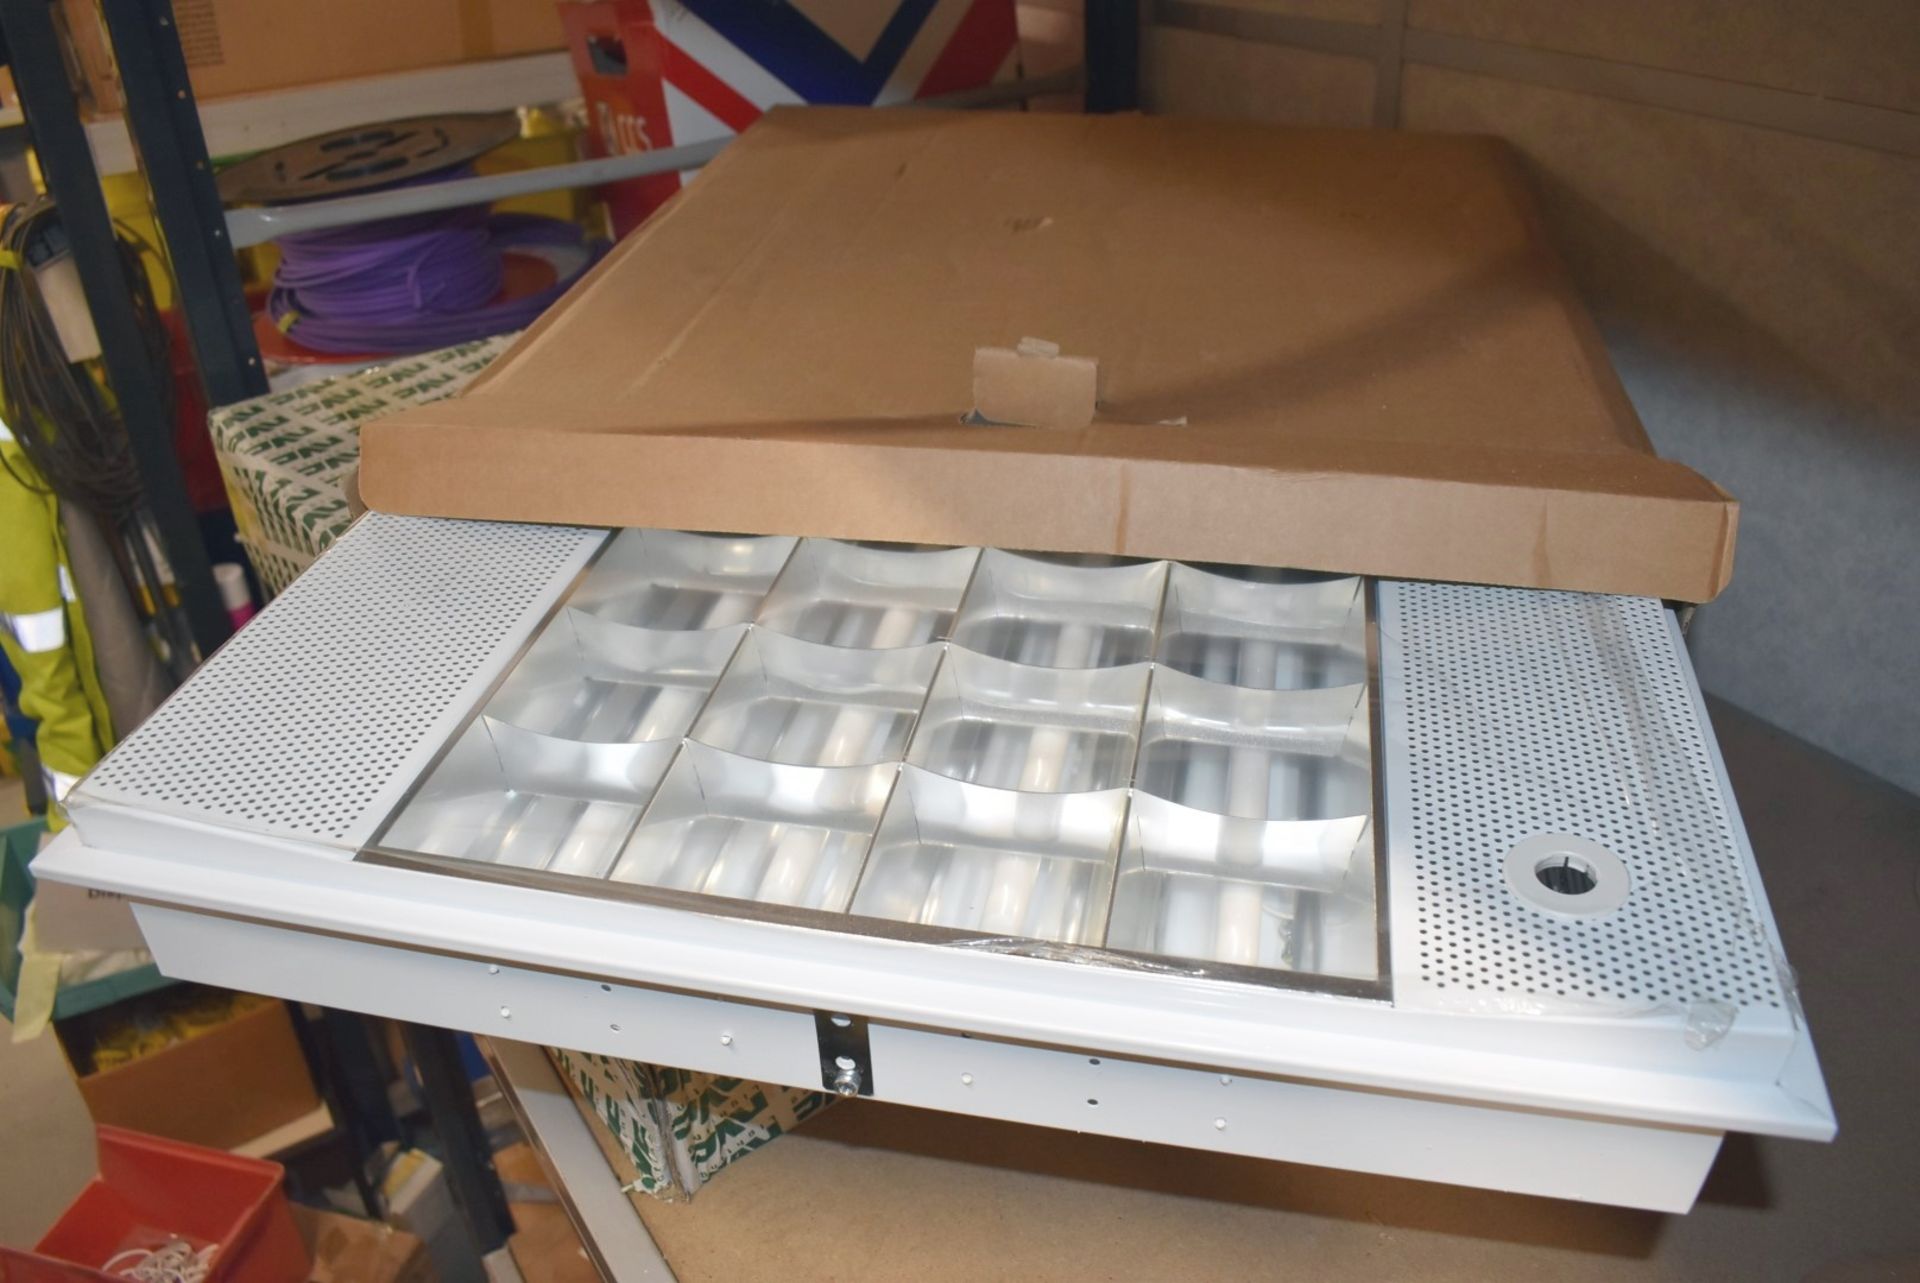 3 x Ceiling Reflective Light Panels - Unused Boxed Stock - Ref: C466 MR1S - CL816 - Location: Birmi